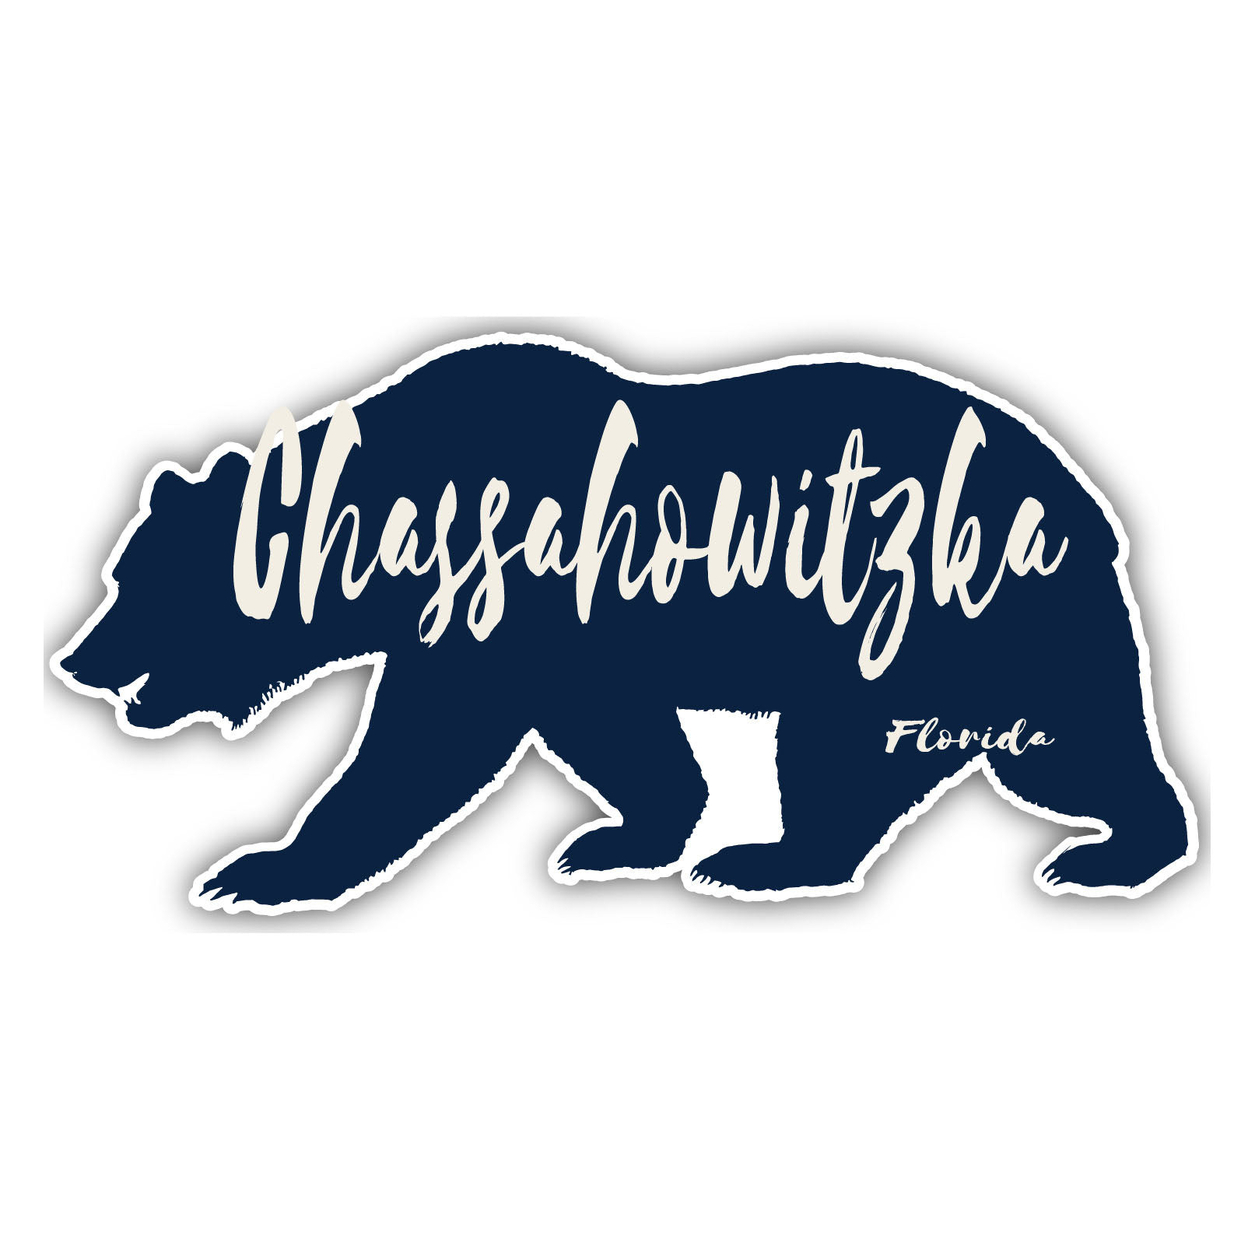 Chassahowitzka Florida Souvenir Decorative Stickers (Choose Theme And Size) - 4-Pack, 8-Inch, Bear